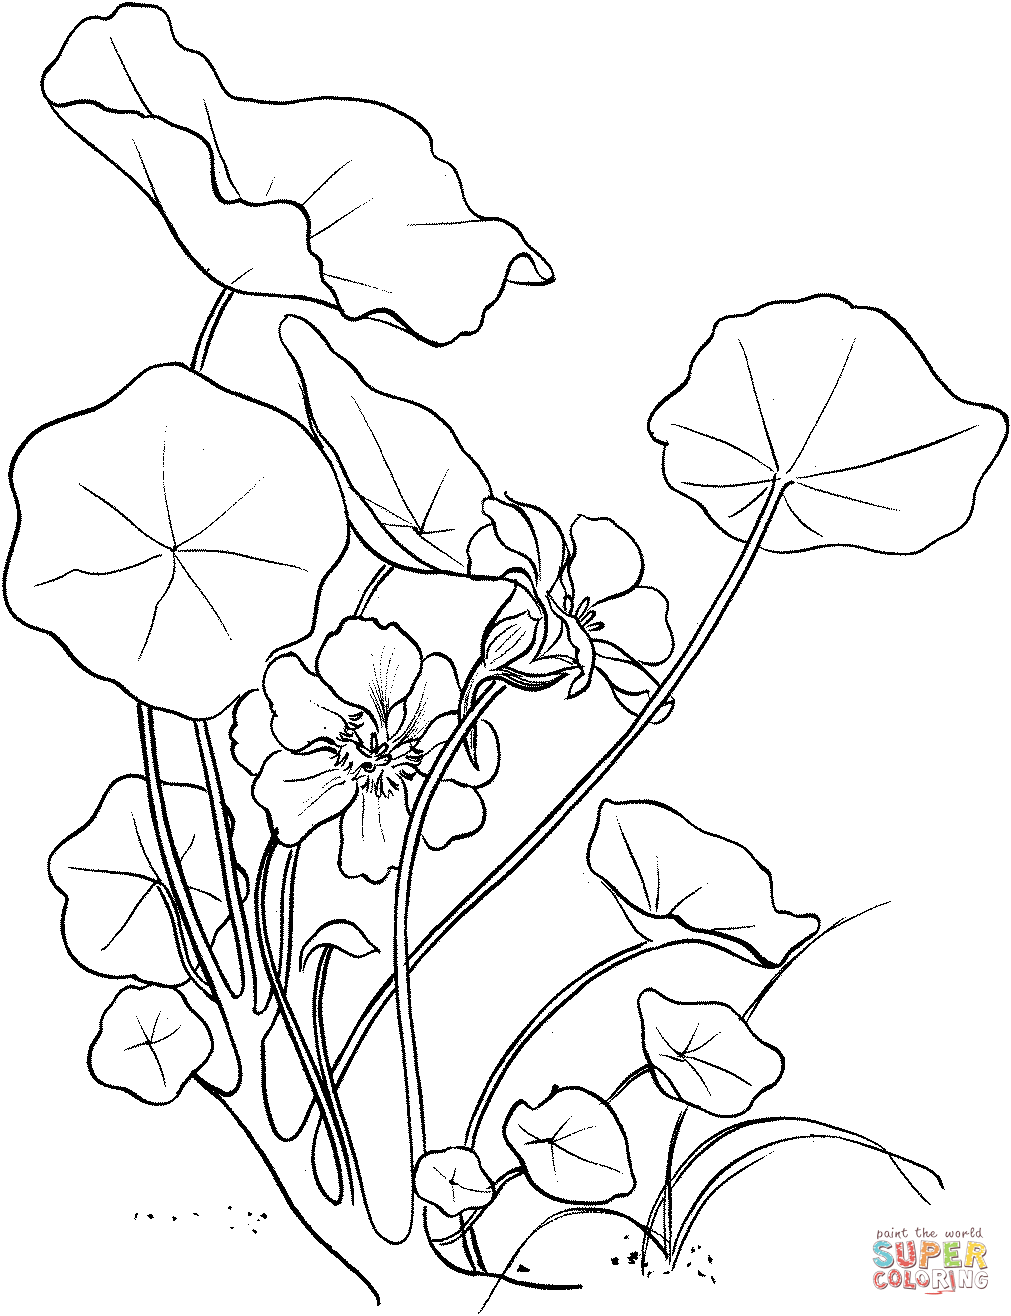 Tropaeolum Majus oder Garten-Kapuzinerkresse aus Kapuzinerkresse